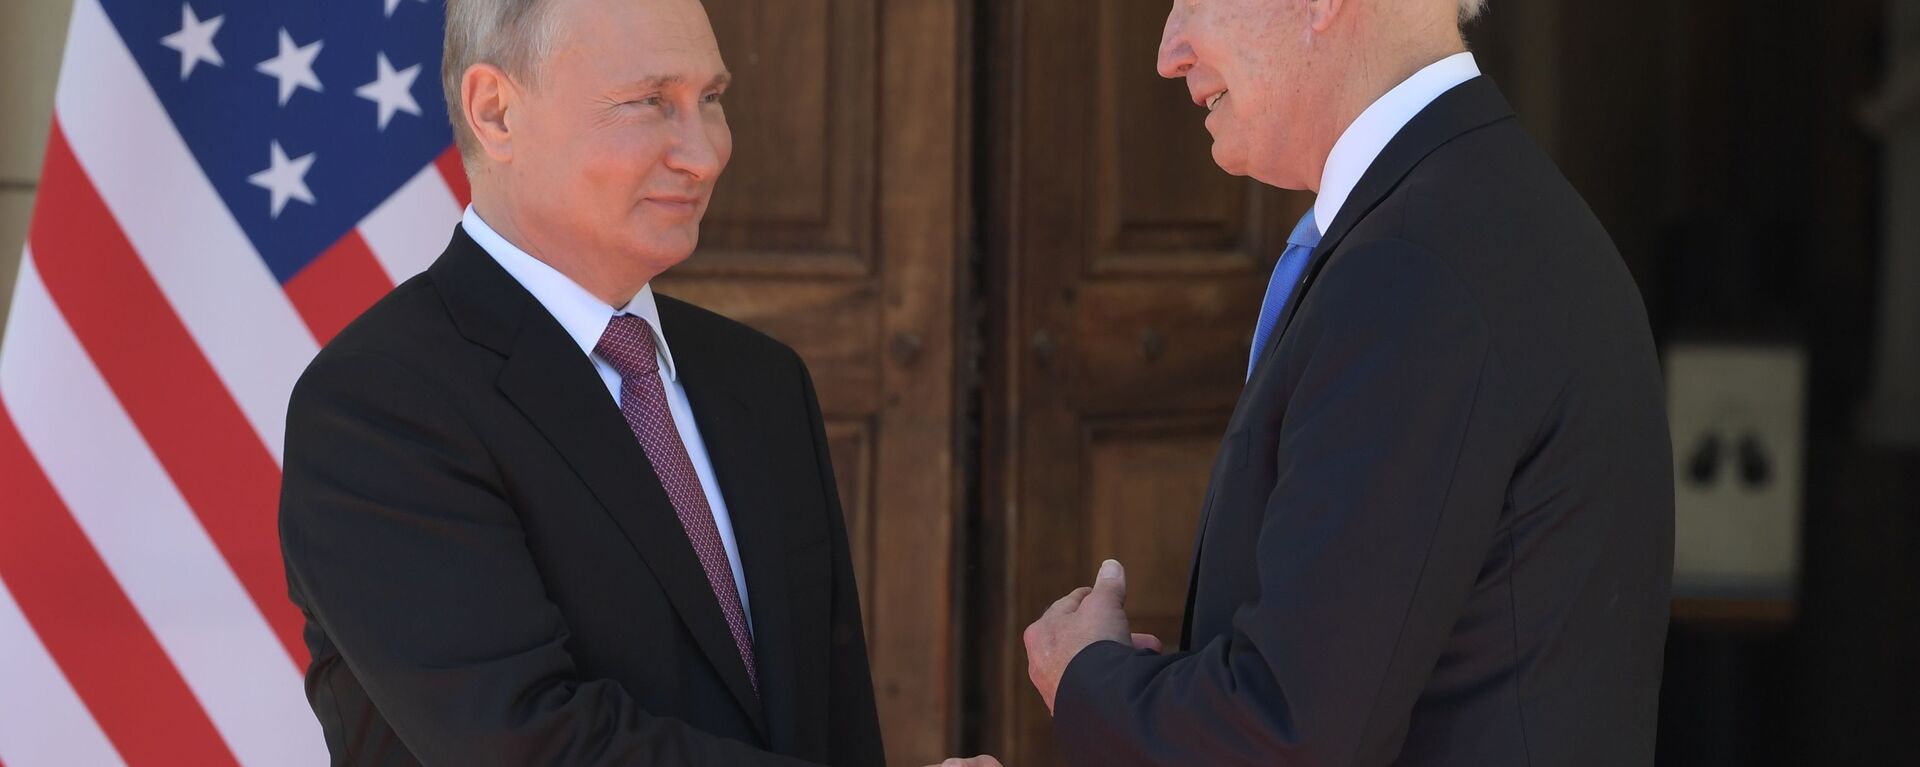 Putin Meets Biden in Geneva - Sputnik International, 1920, 29.09.2021